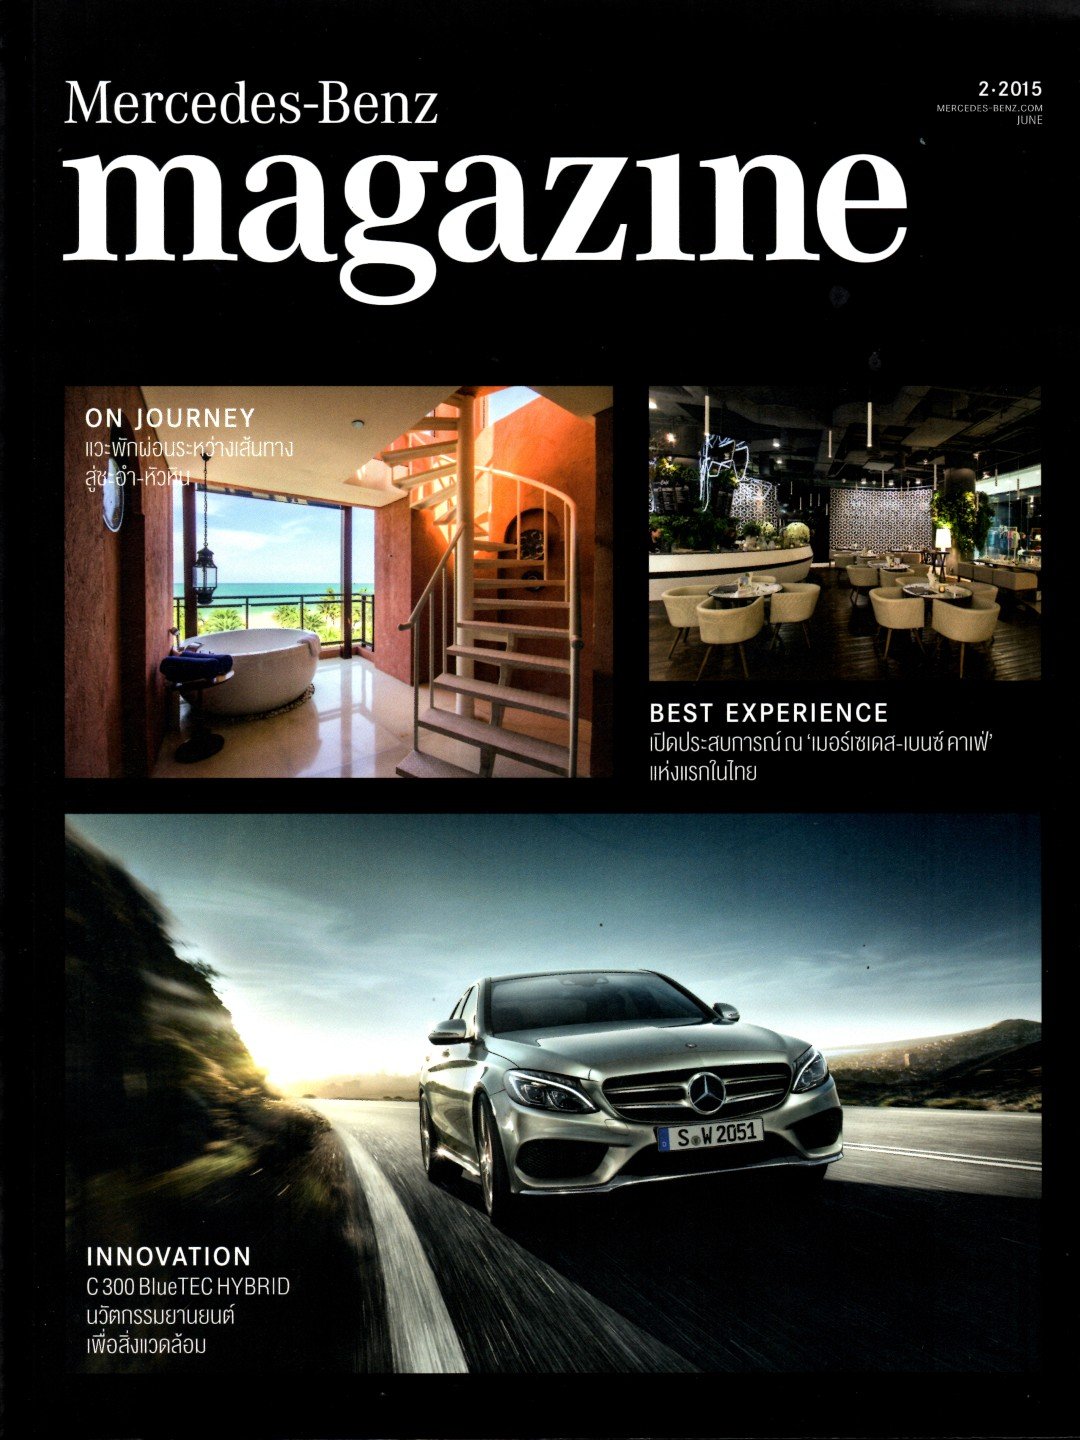 Lee Seng Jewelry ในนิตยสาร Mercedes-Benz Magazine ประจำเดือนมิถุนายน 2558...ห้างเพชรหลีเสง ผู้ผลิตเพชรรายเดียวในหนังสือ Mercedes BENZ...